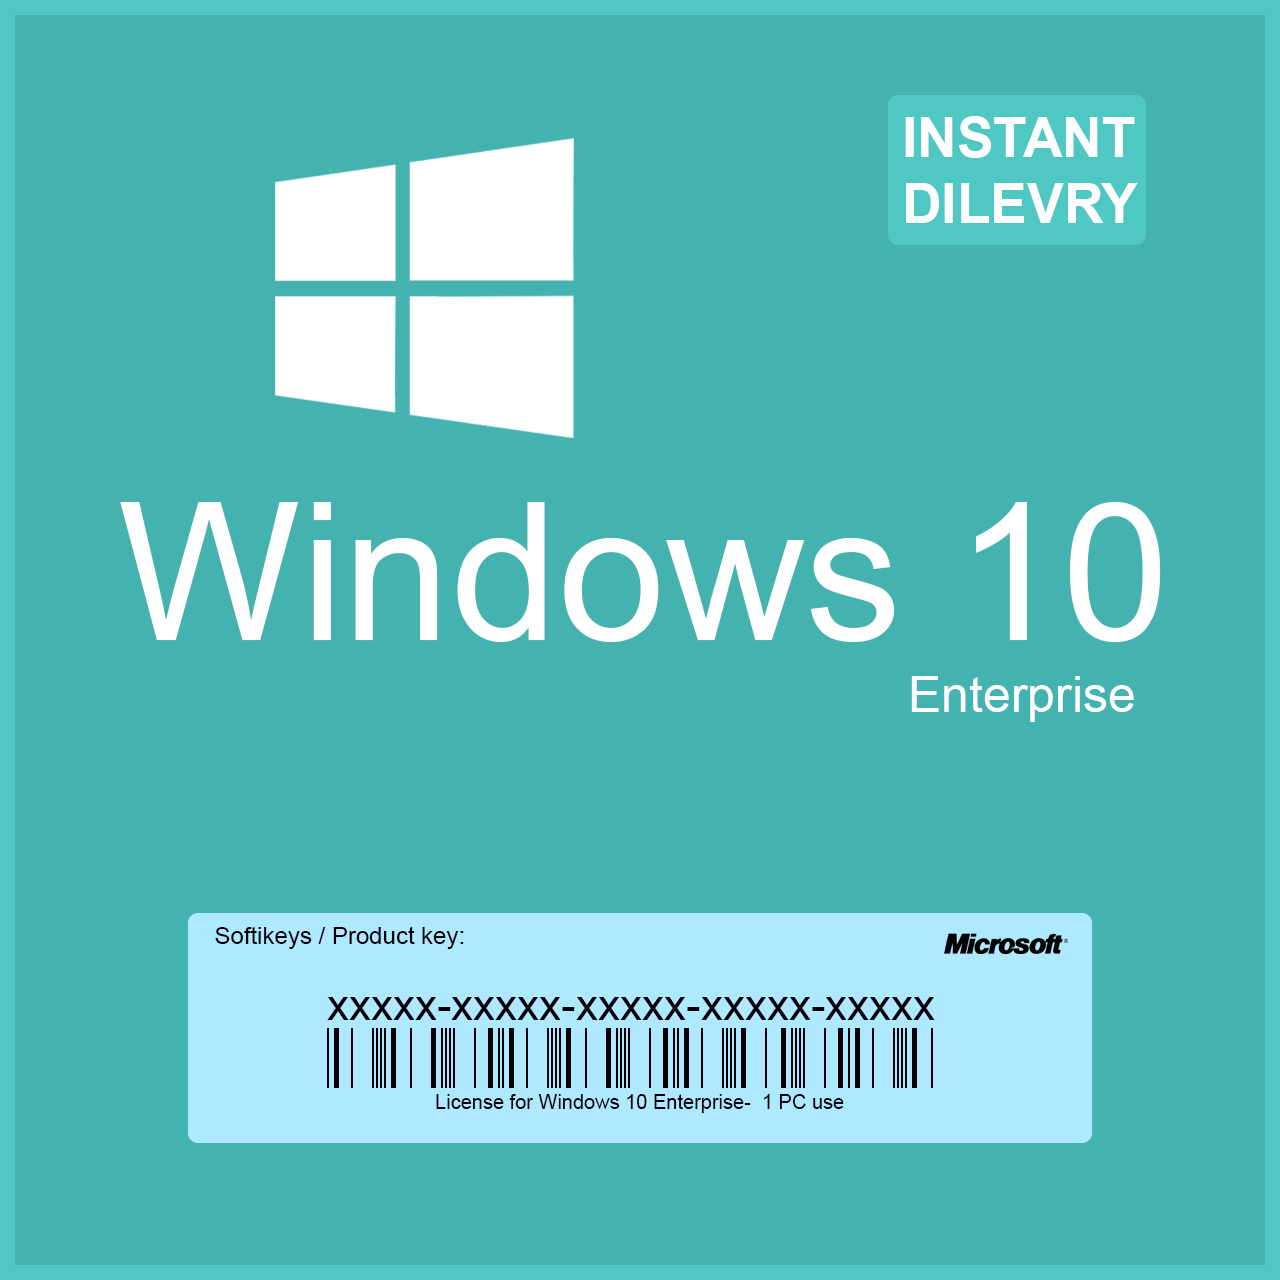 Buy Windows 10 Enterprise Product Key Only 35.99 Windows Store